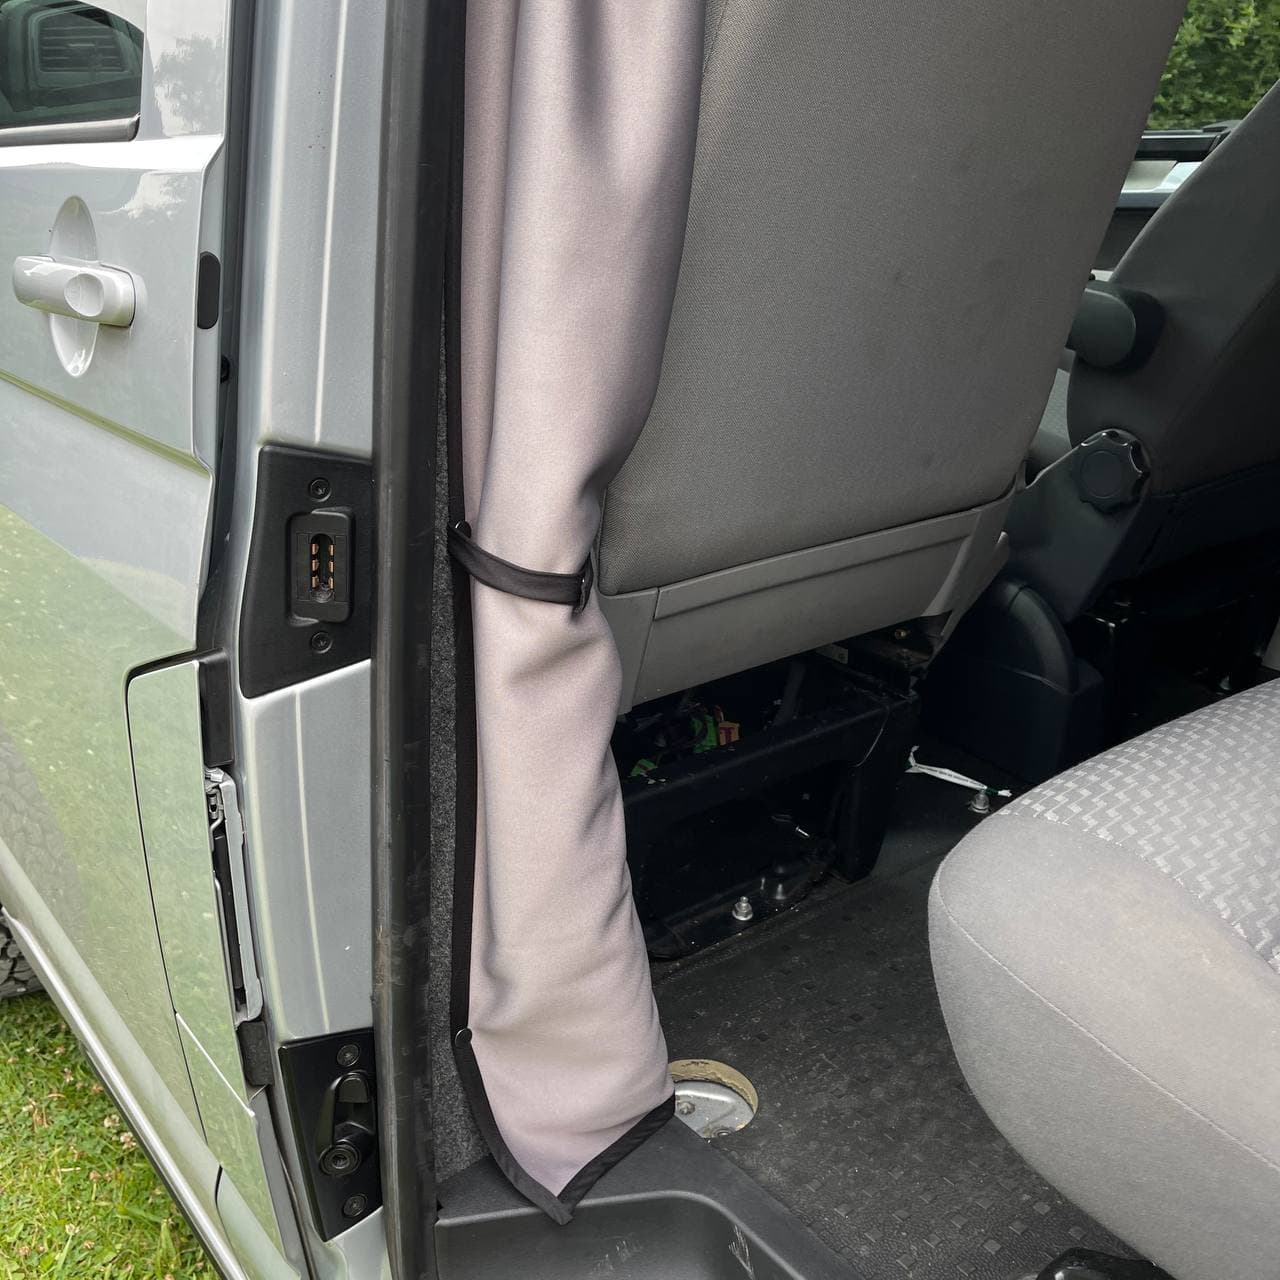 Für VW Caddy Fahrerhausteiler Vorhang Kit